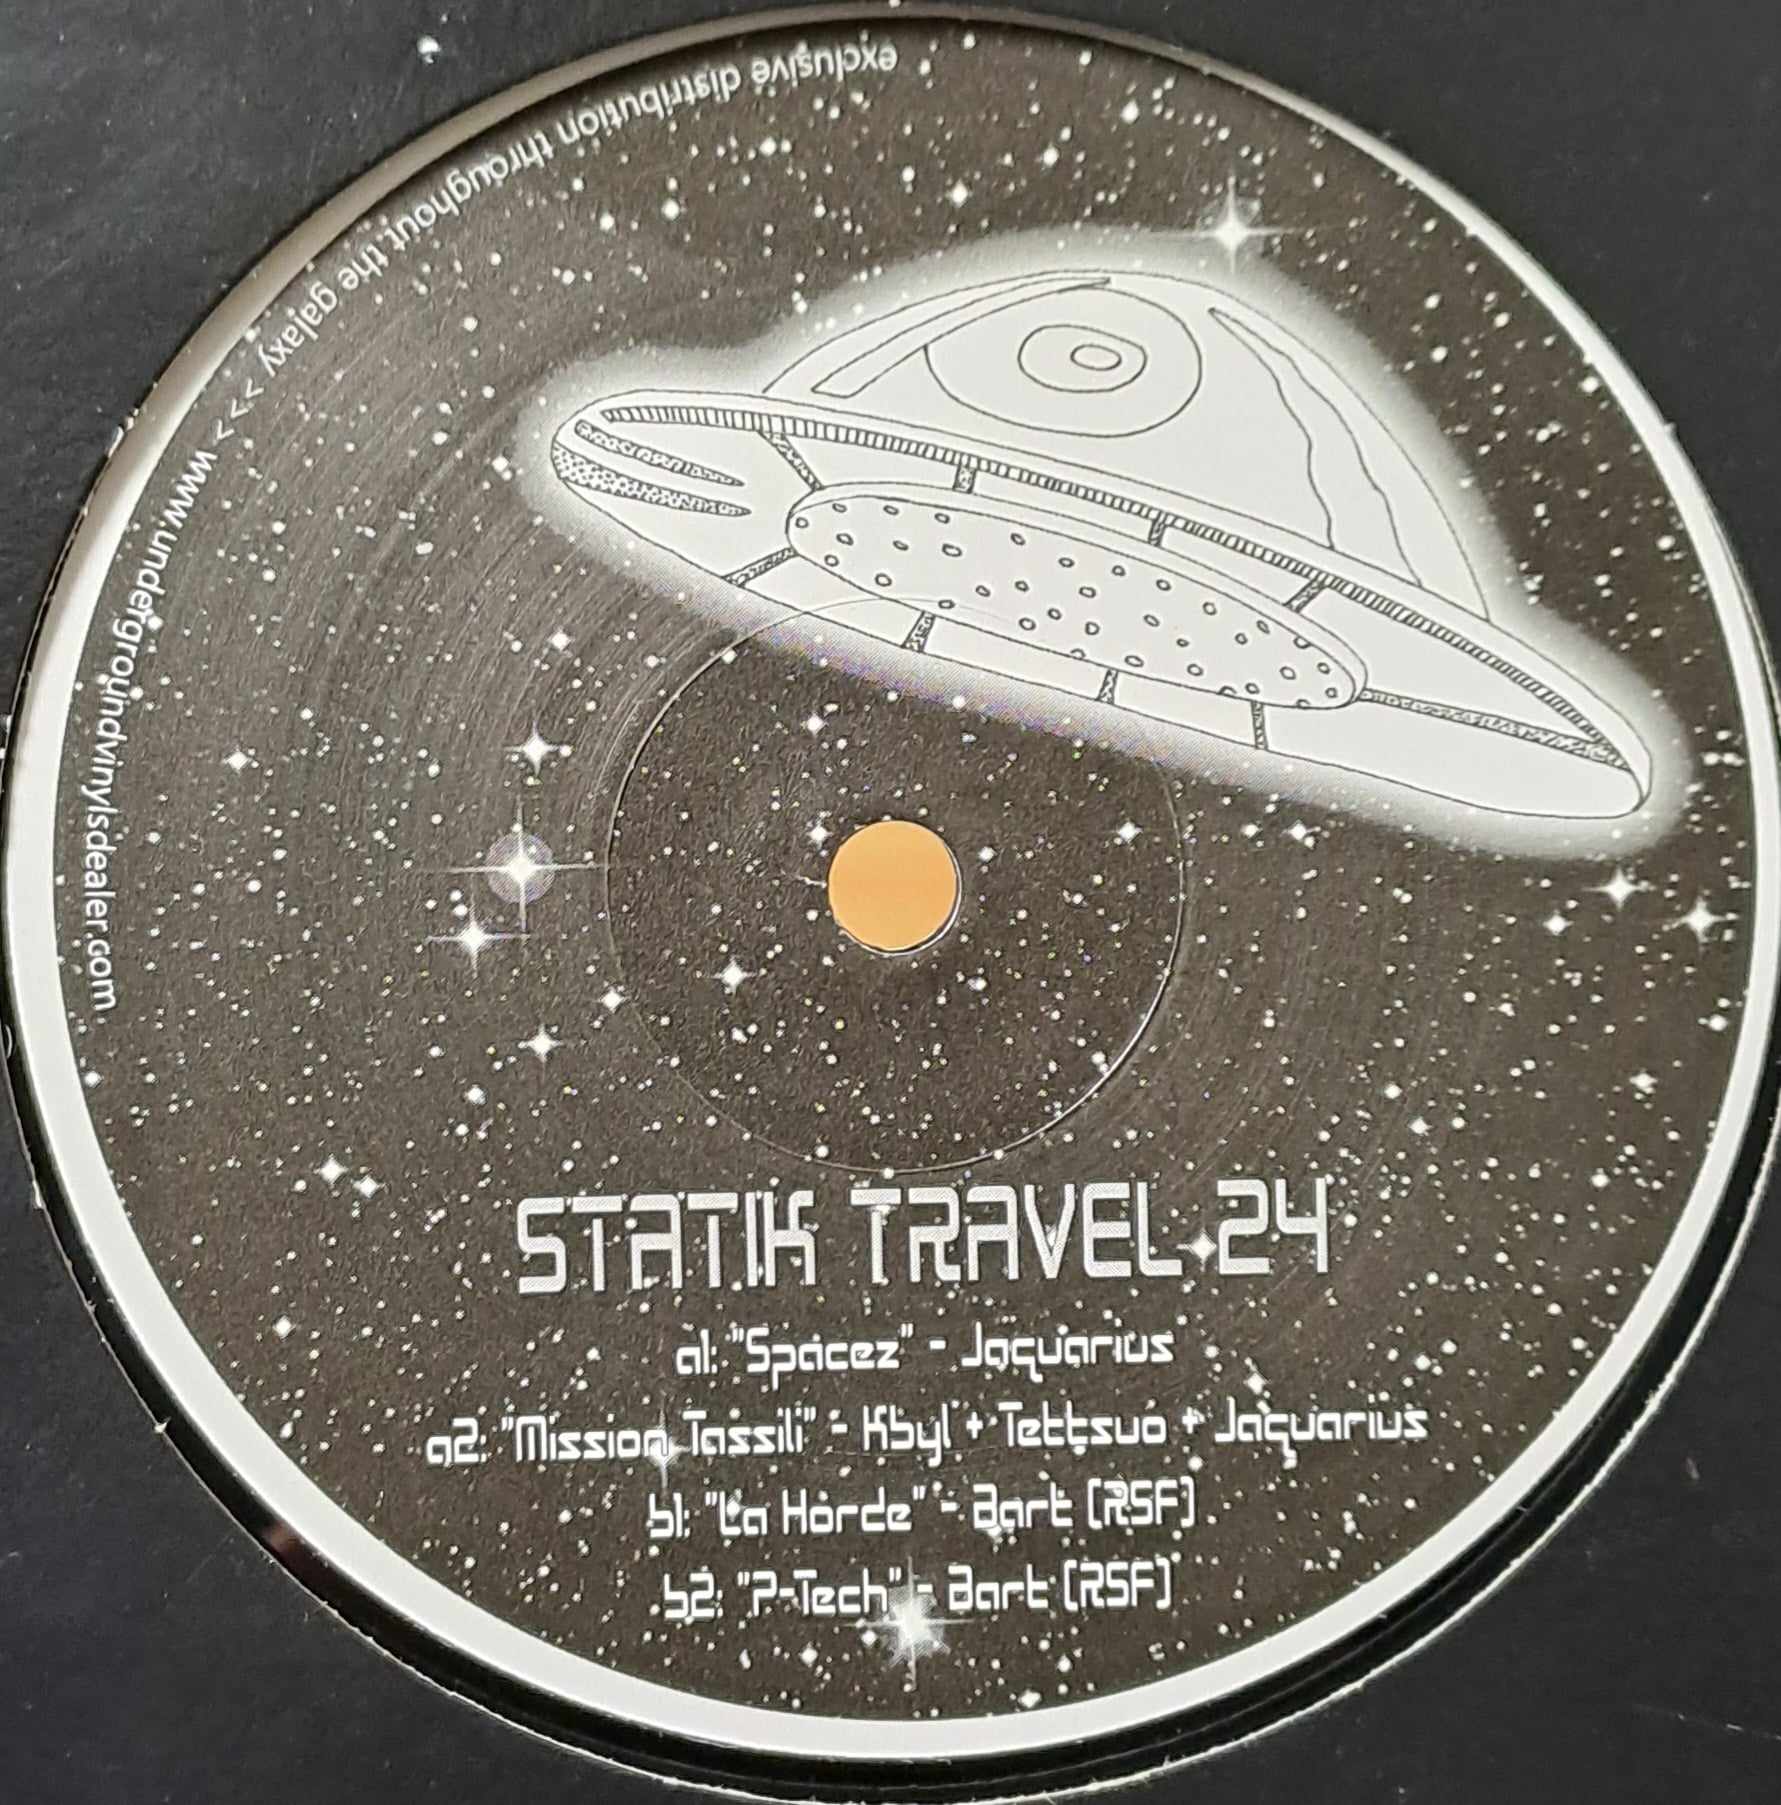 Statik Travel 24 - vinyle freetekno